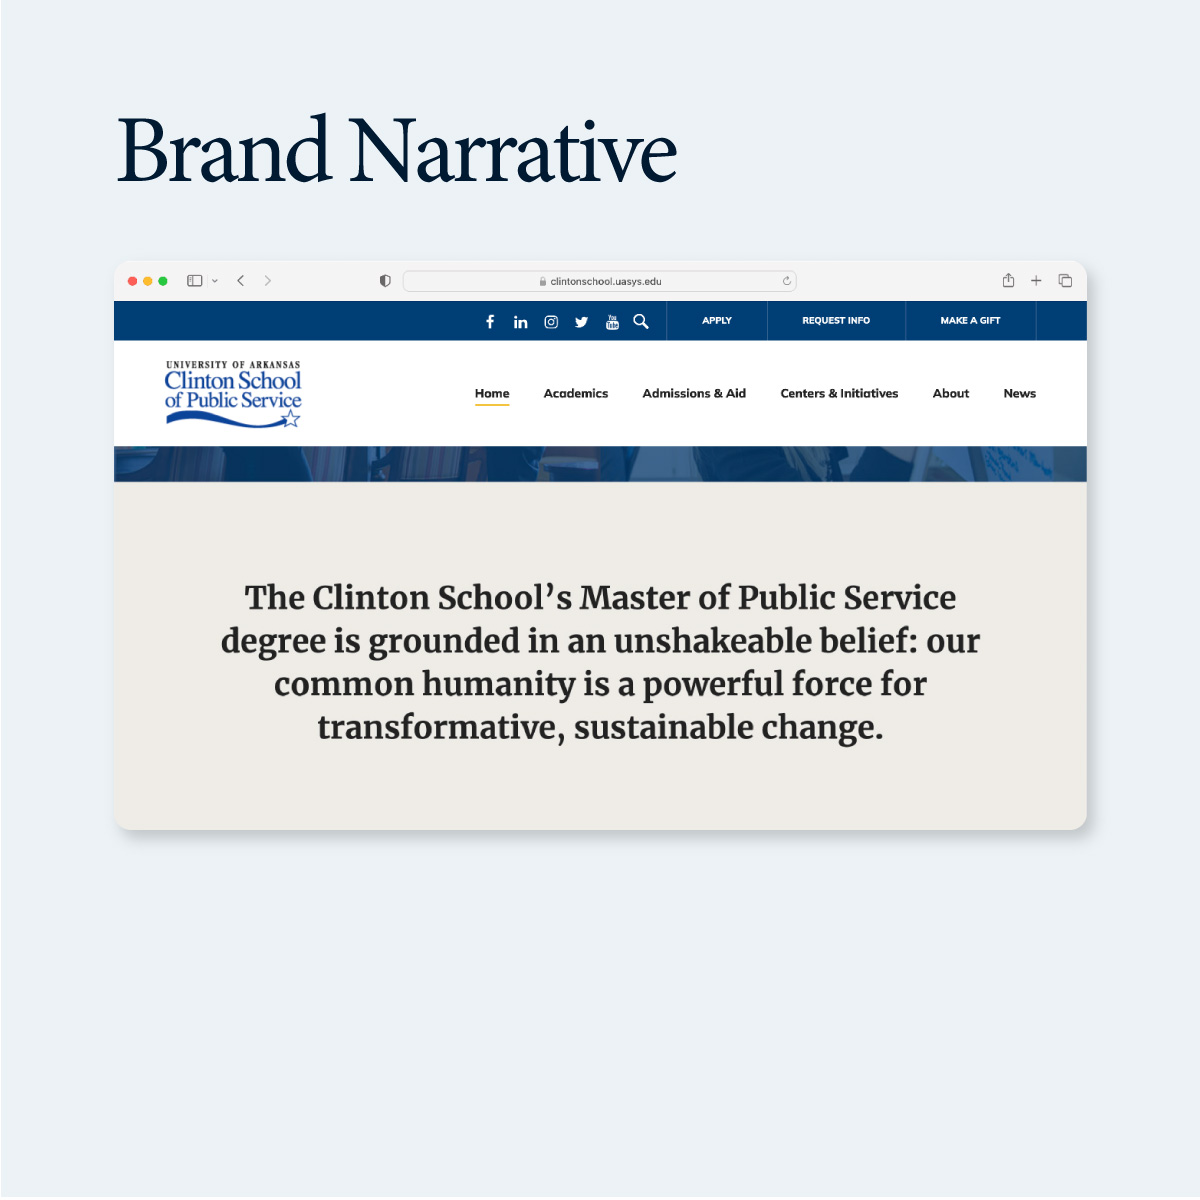 Brand Narrative web page